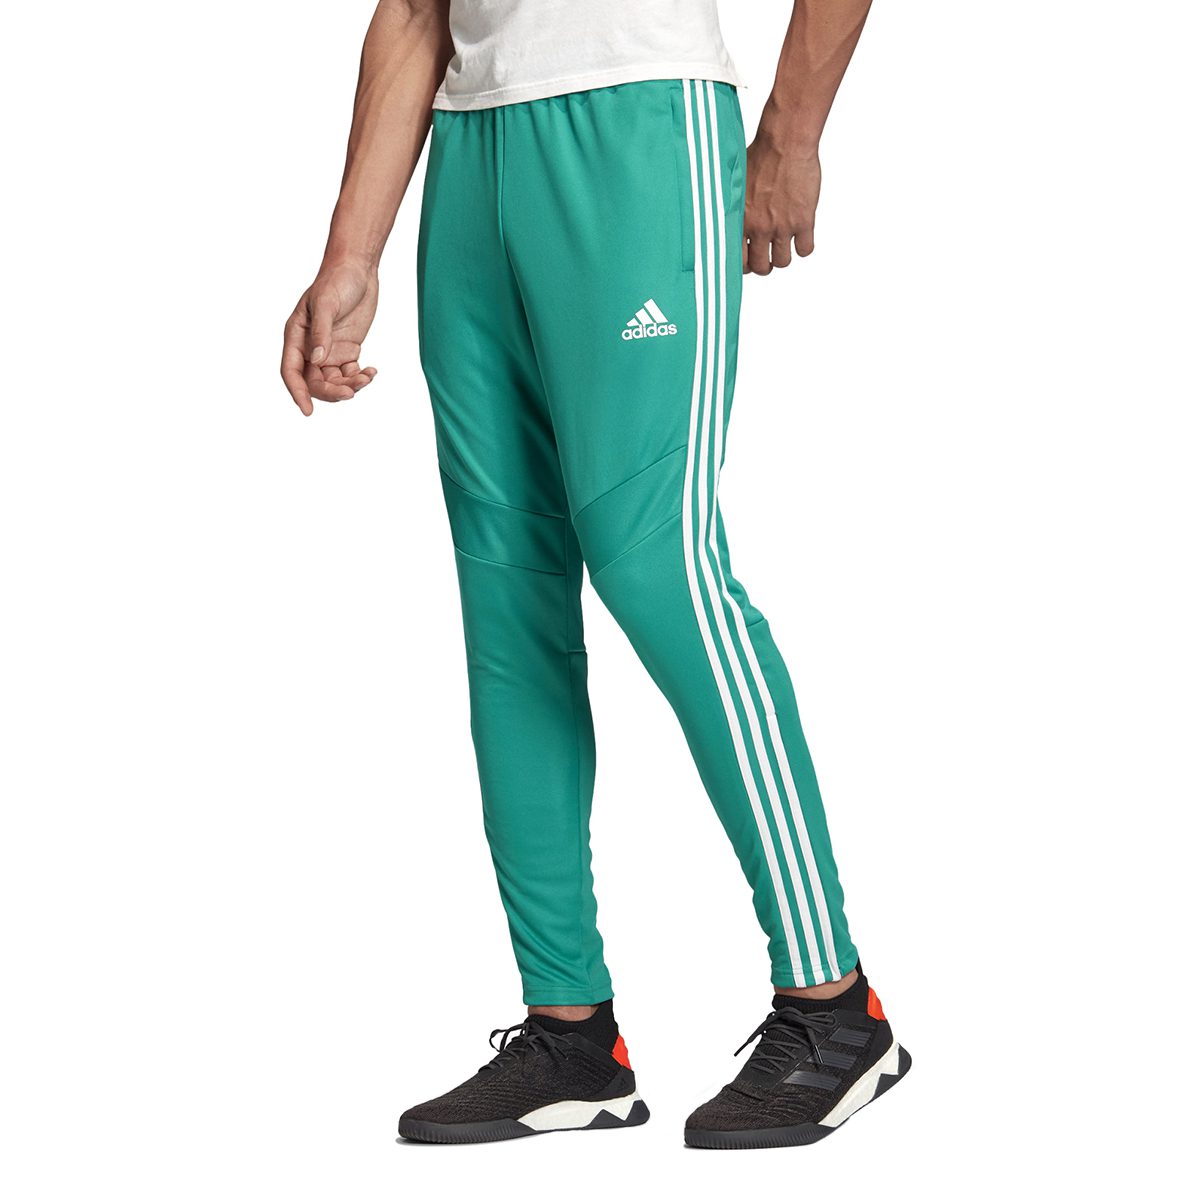 Adidas Men's Tiro 19 Glory Green/White Training Pants FT8432 - WOOKI.COM